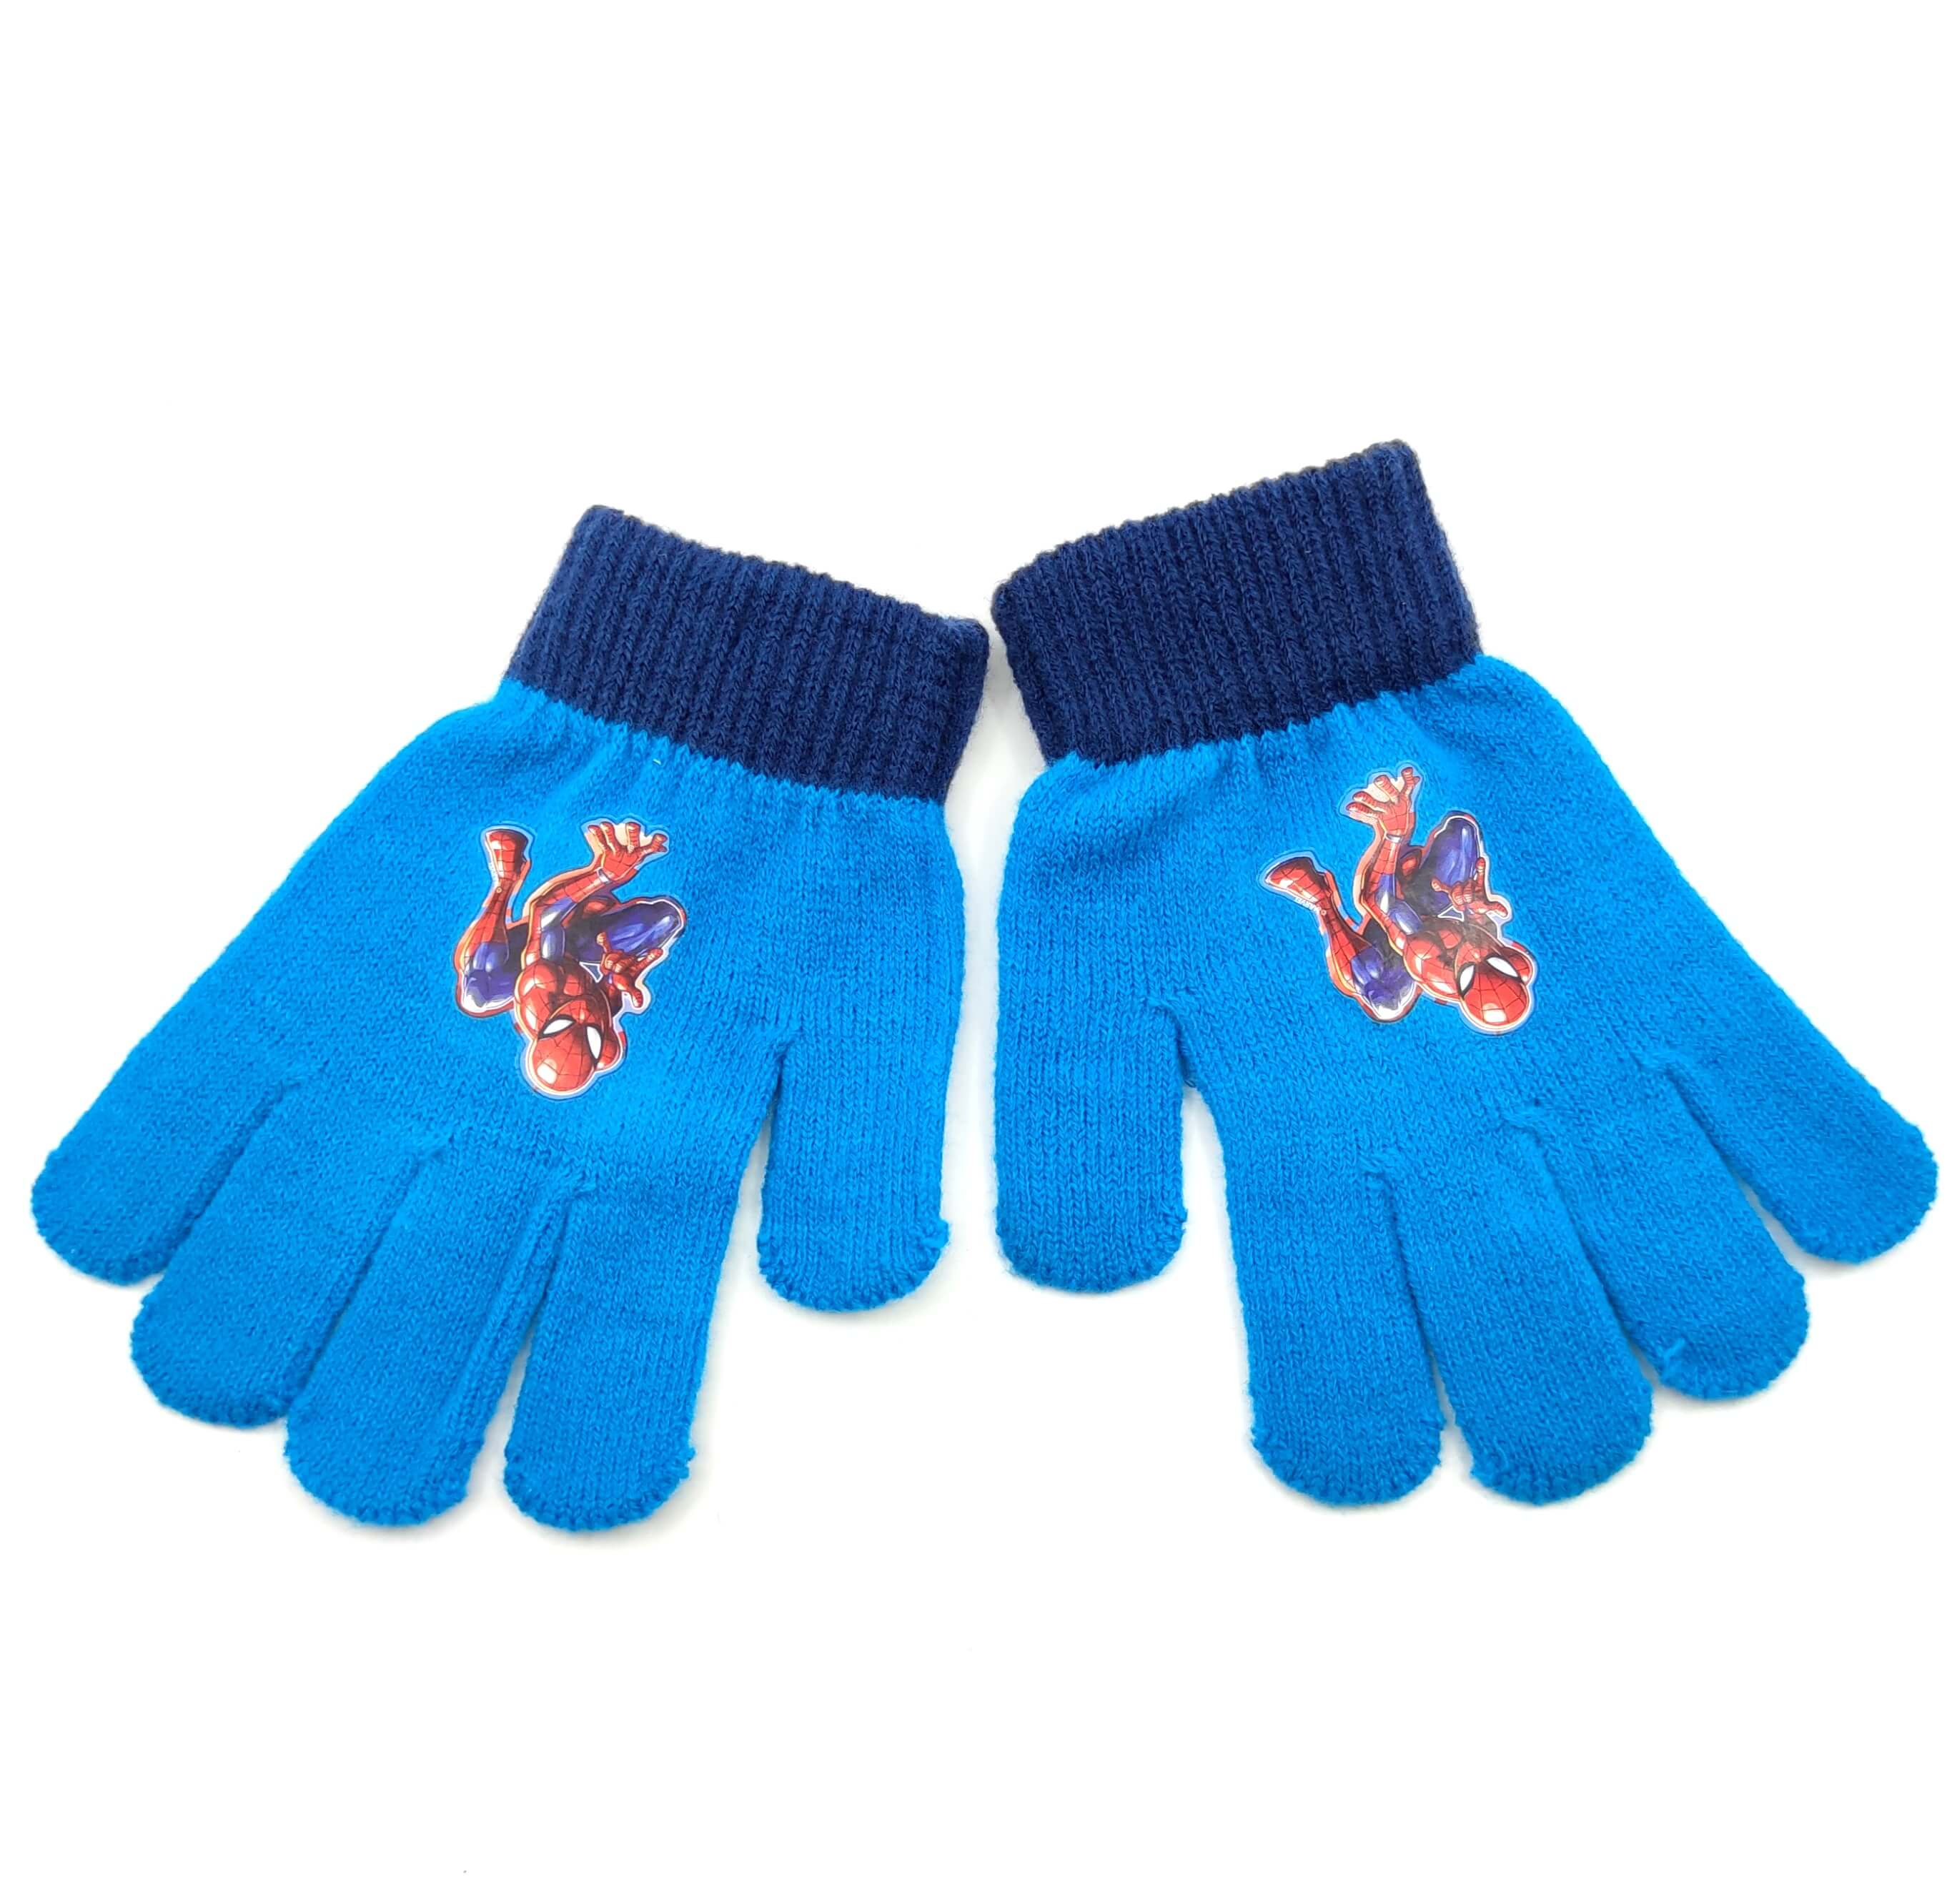 Boys' winter gloves - Spiderman light blue